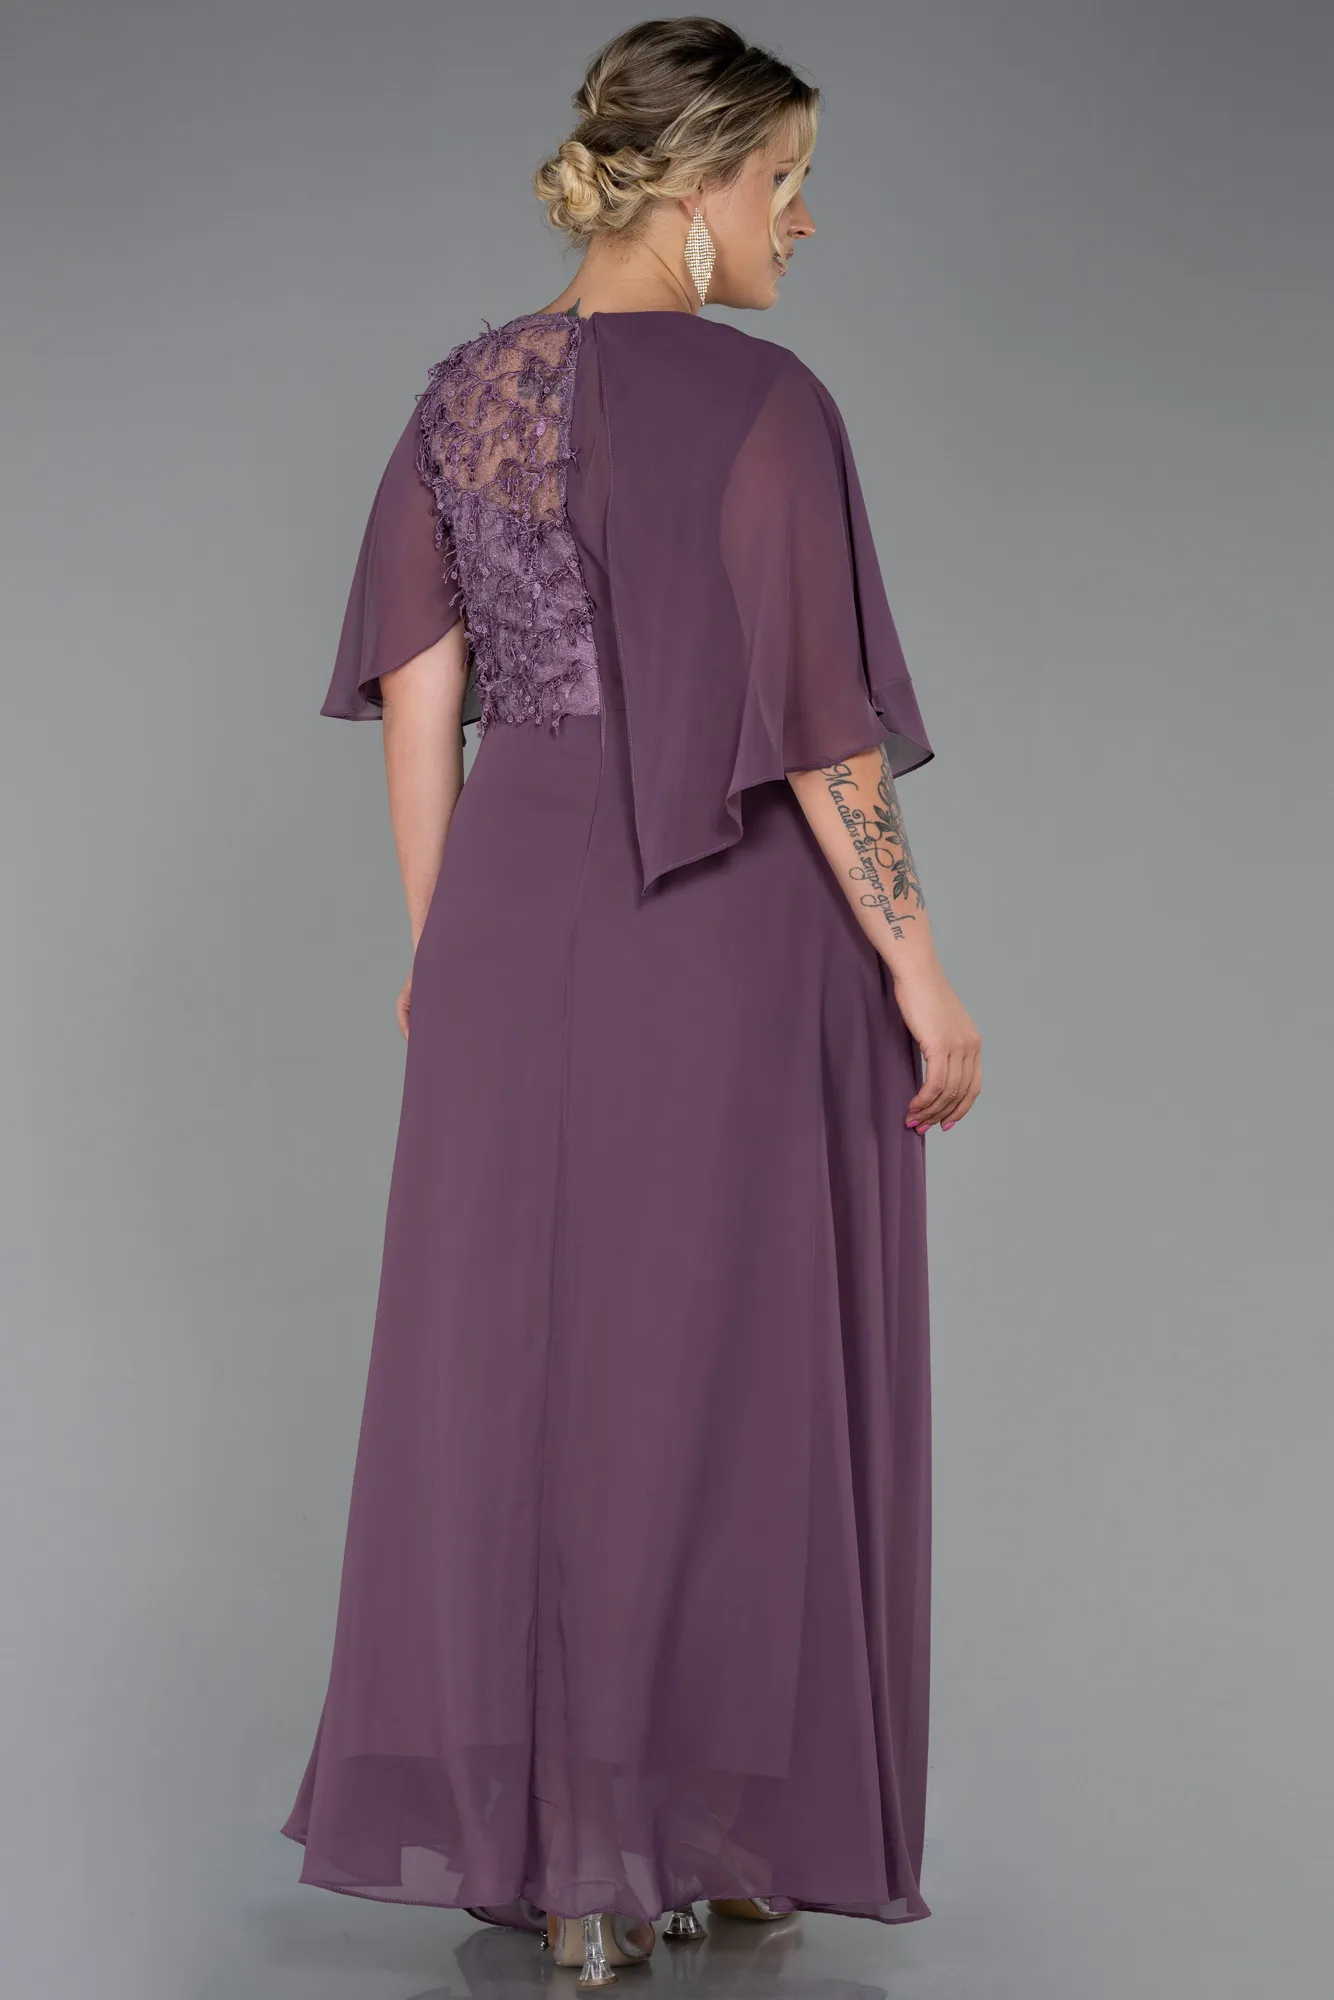 Lavender-Long Chiffon Plus Size Evening Dress ABU3257